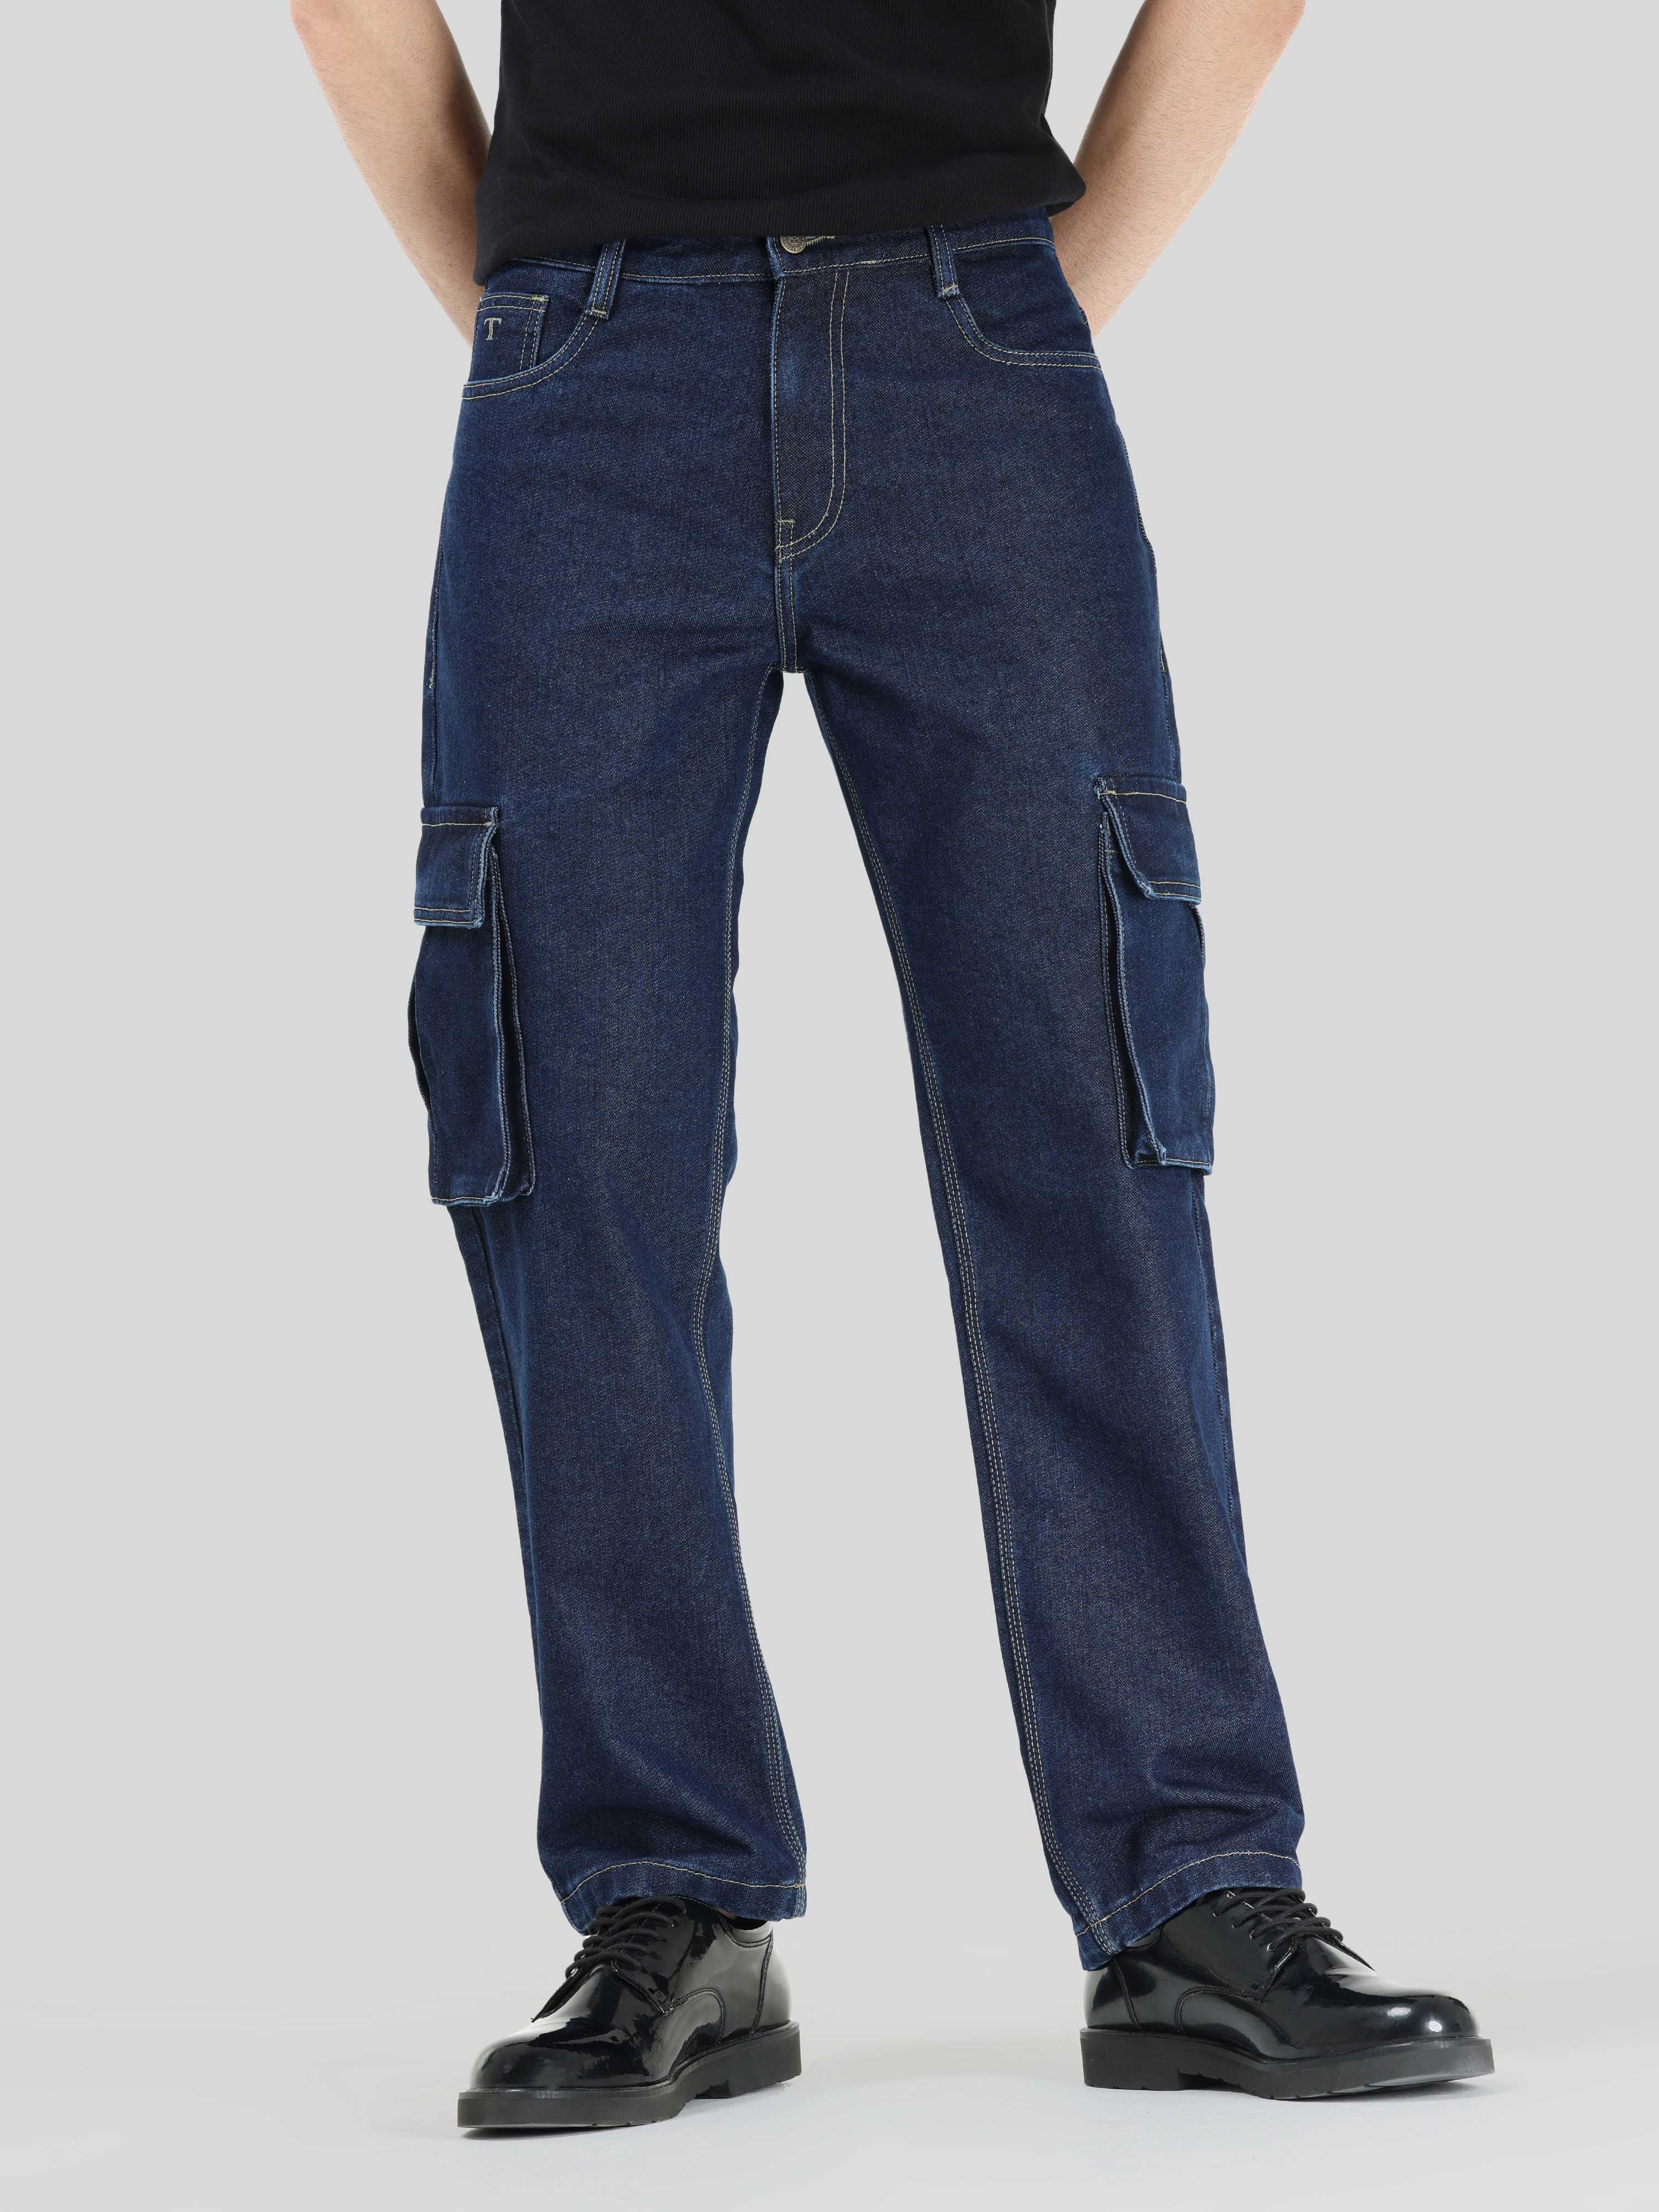 Levis Series 53 Men's Workwear Straight Denim Cargo Jeans /Pants W38 x L32  | eBay